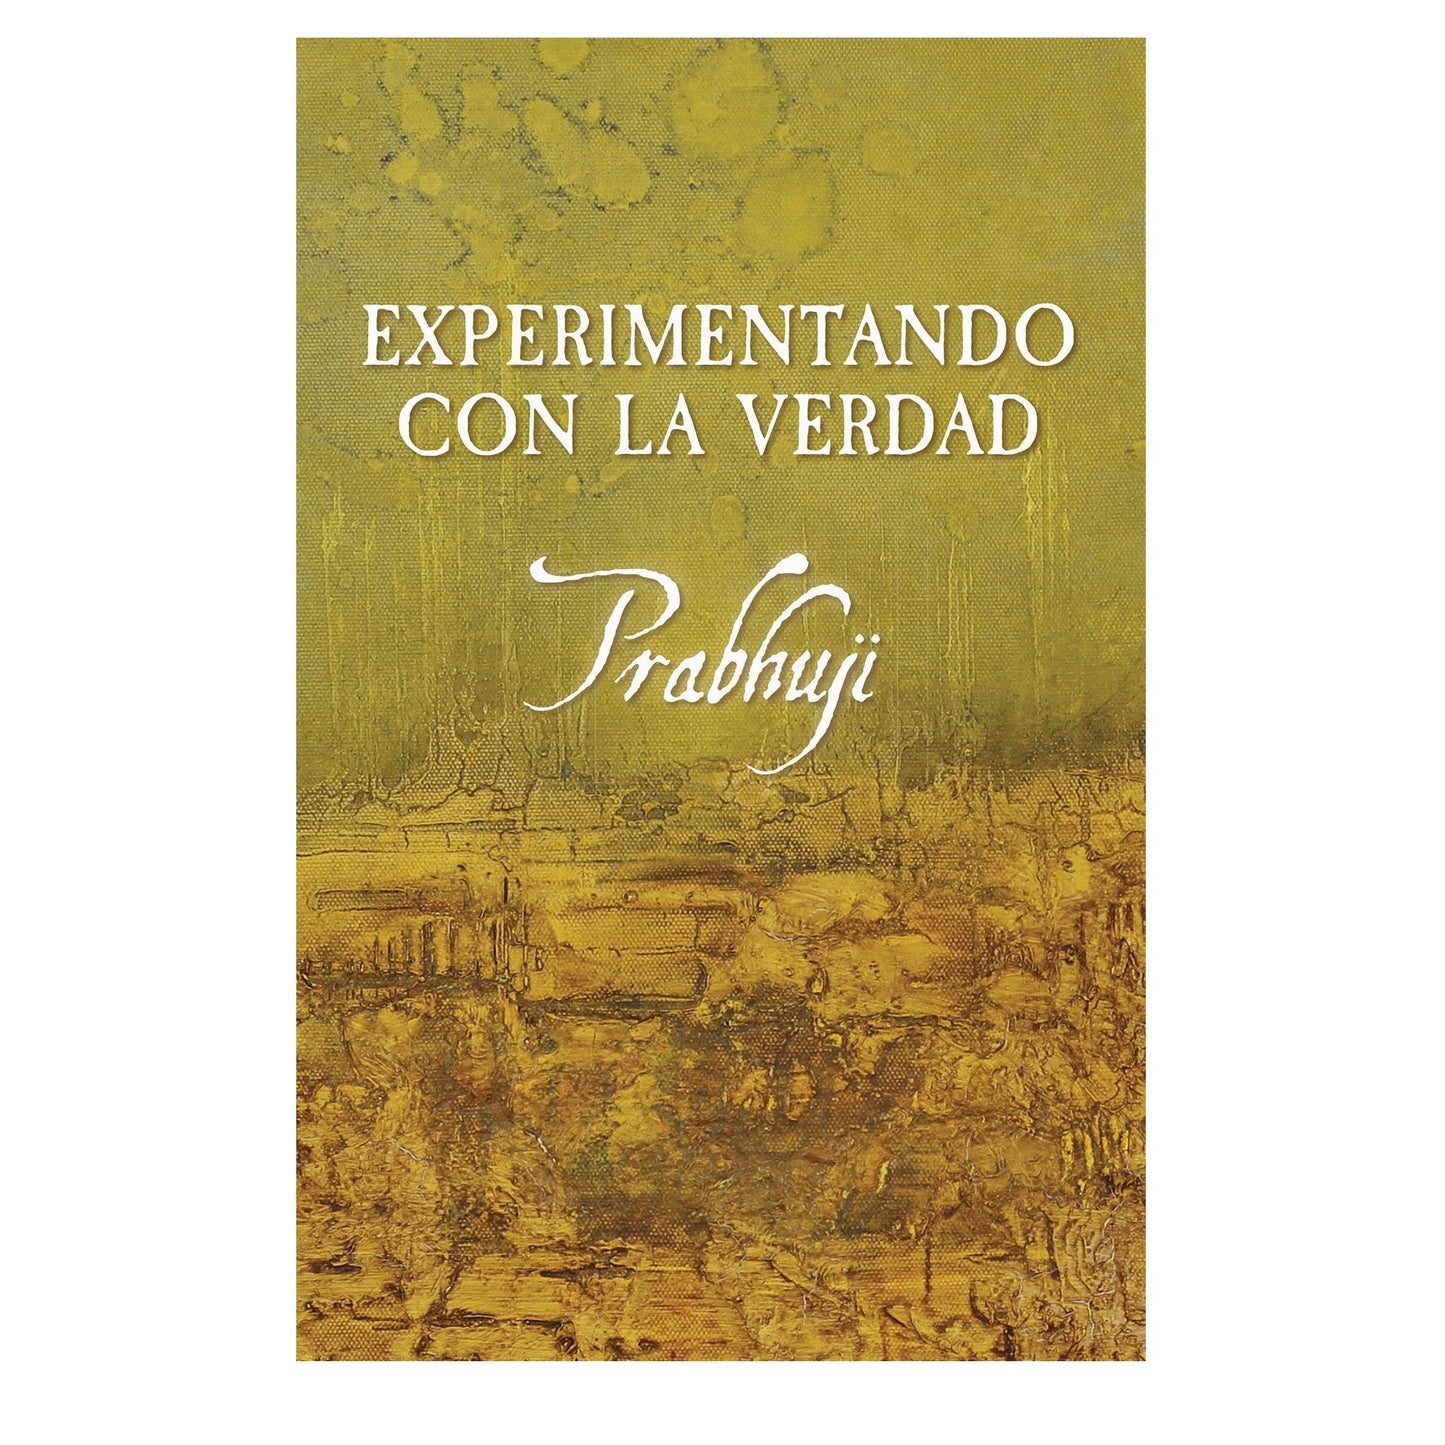 Experimentando con la Verdad con Prabhuji (Paperback - Spanish) - Tree Spirit Wellness